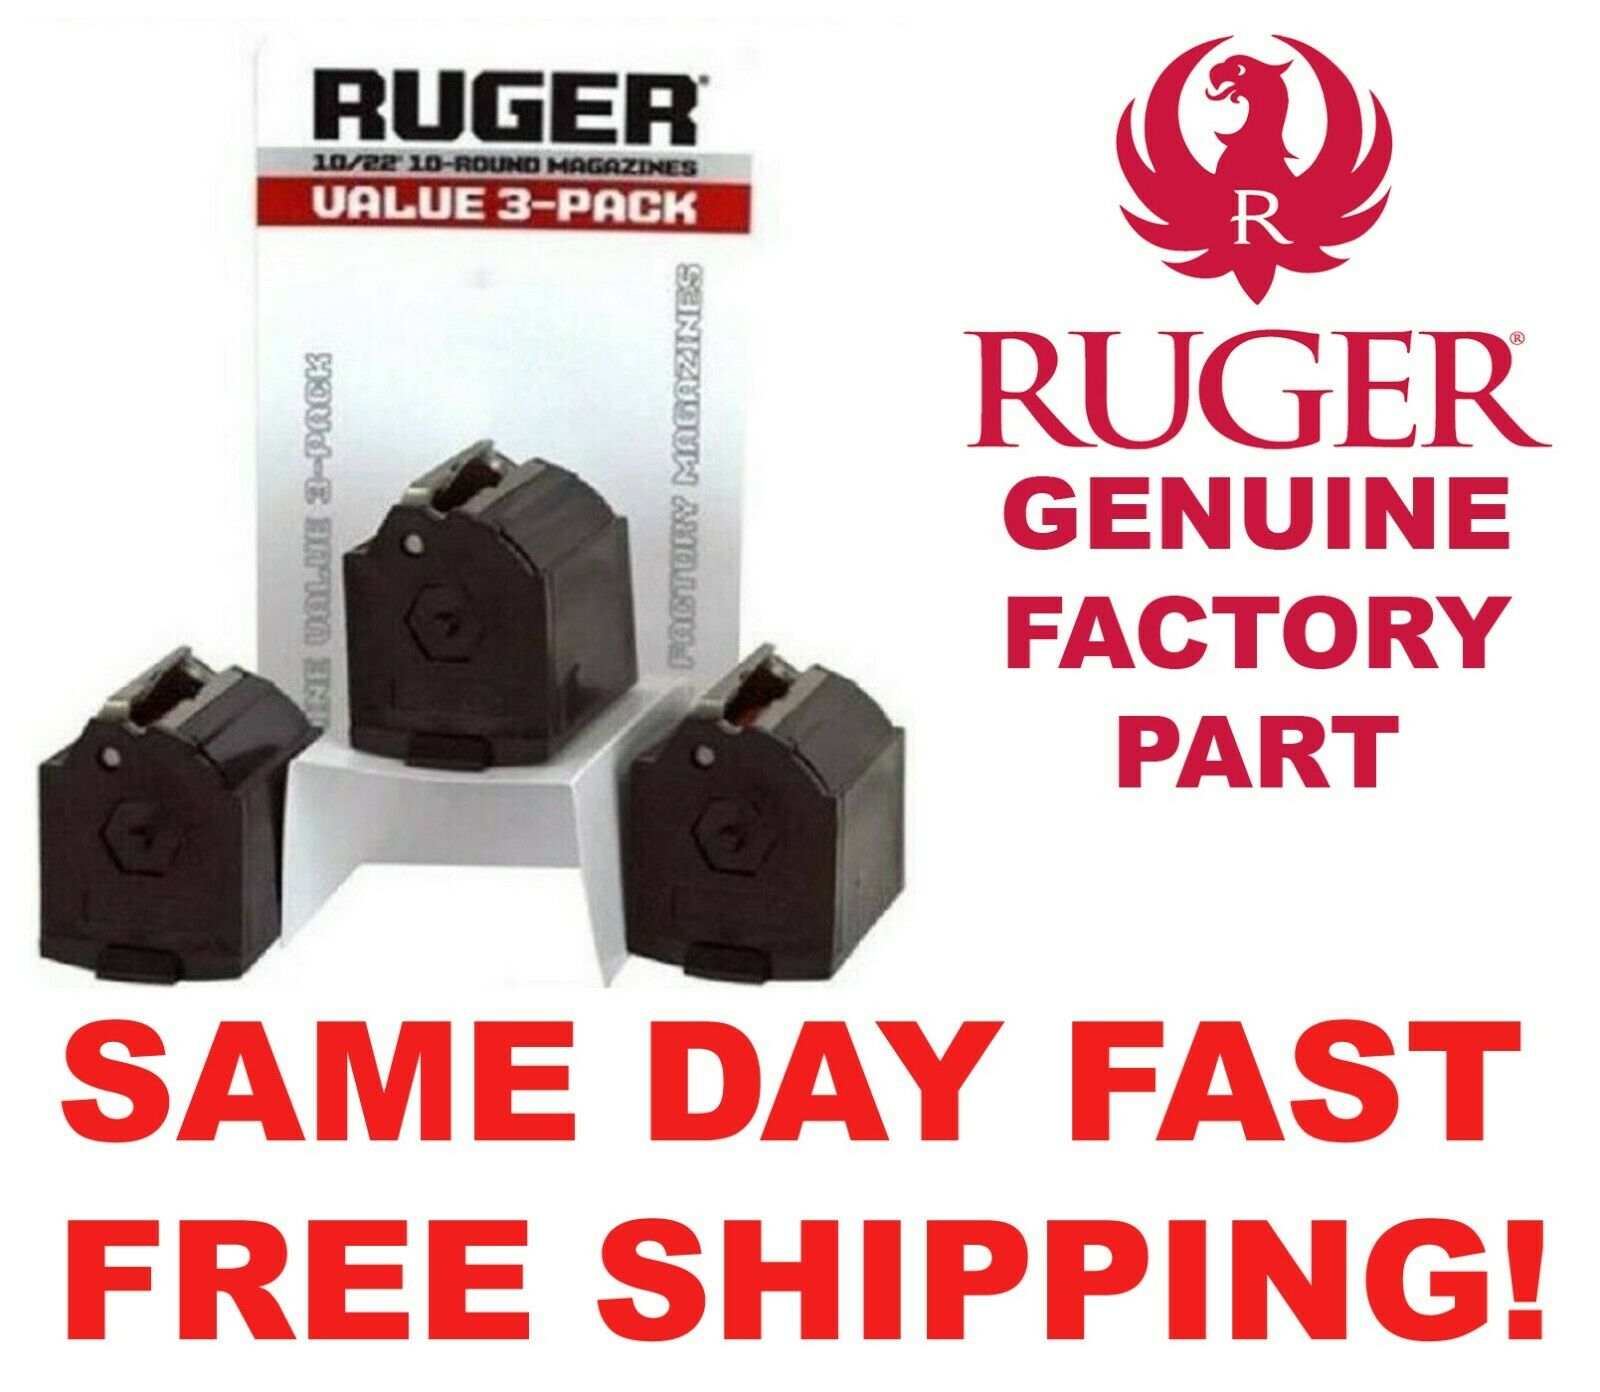 Ruger 90005 10/22 Magazine Value 3 Pack BX-1 22LR 10 Rd SAME DAY FAST FREE SHIP